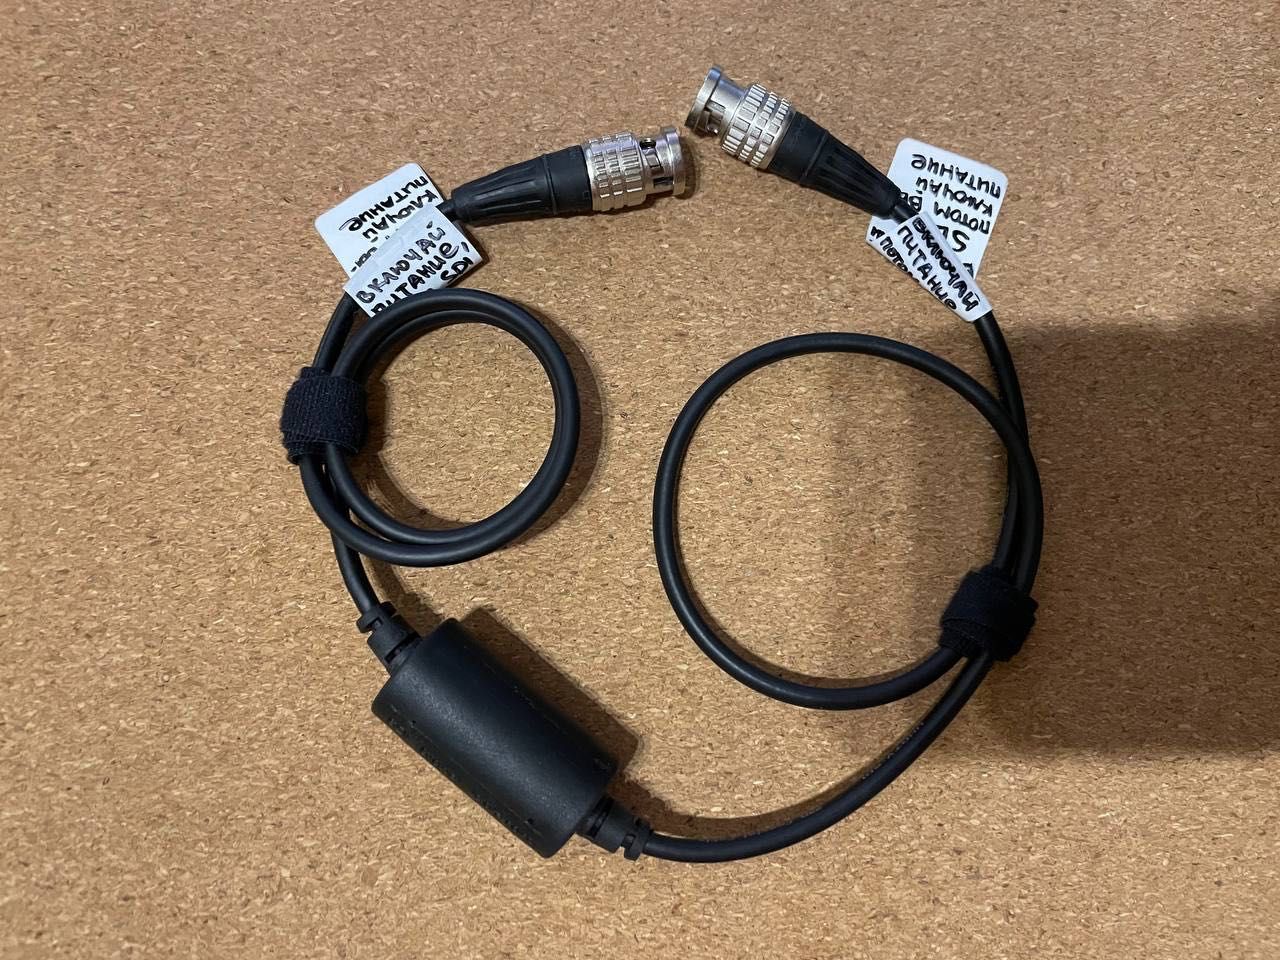 ARRI SDI Isolator Cable